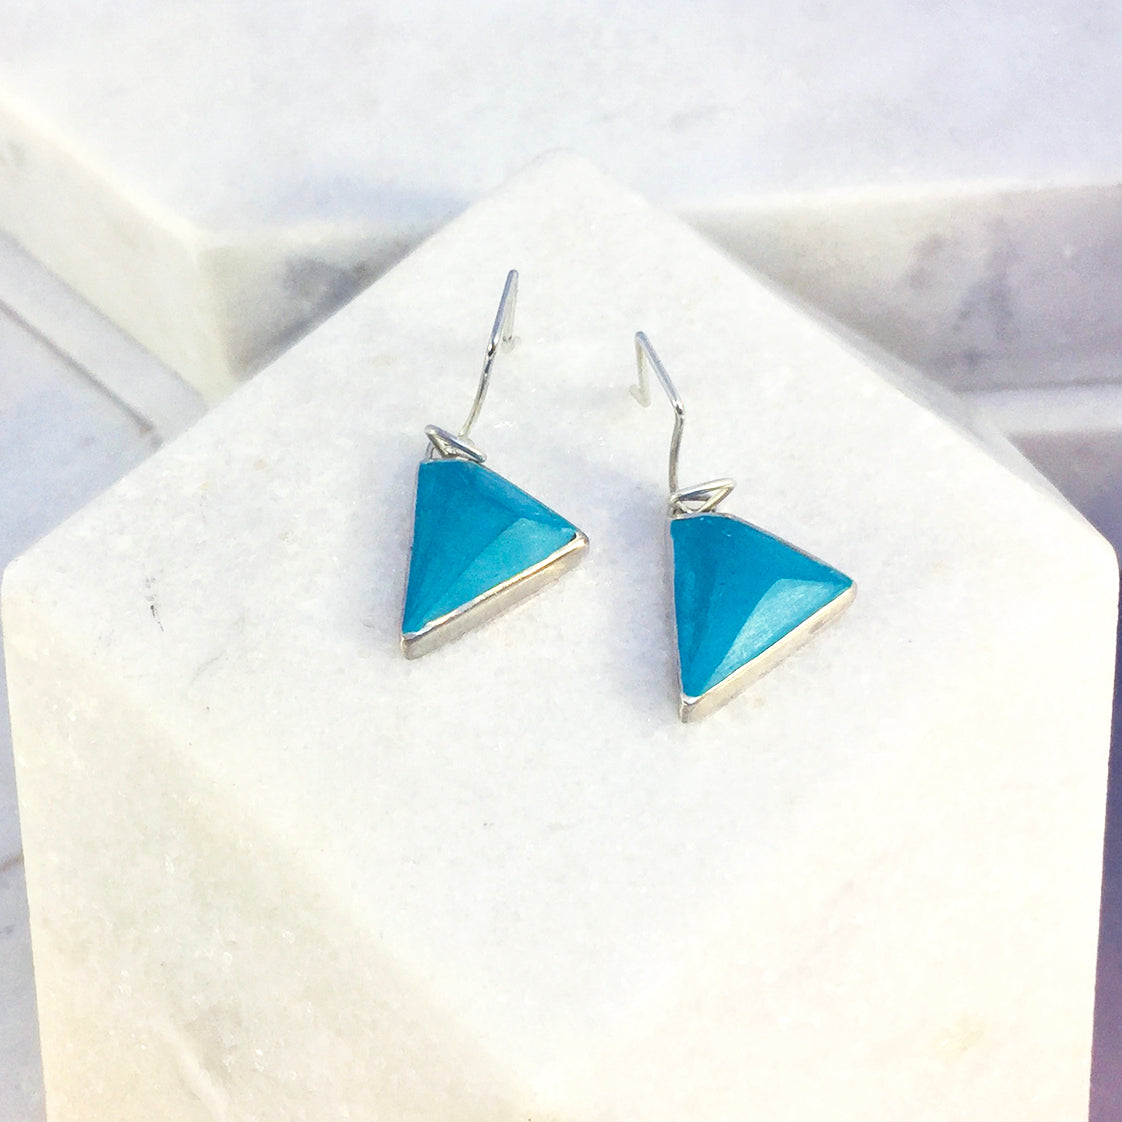 Reversible - Sterling silver blue & turquoise drop earrings